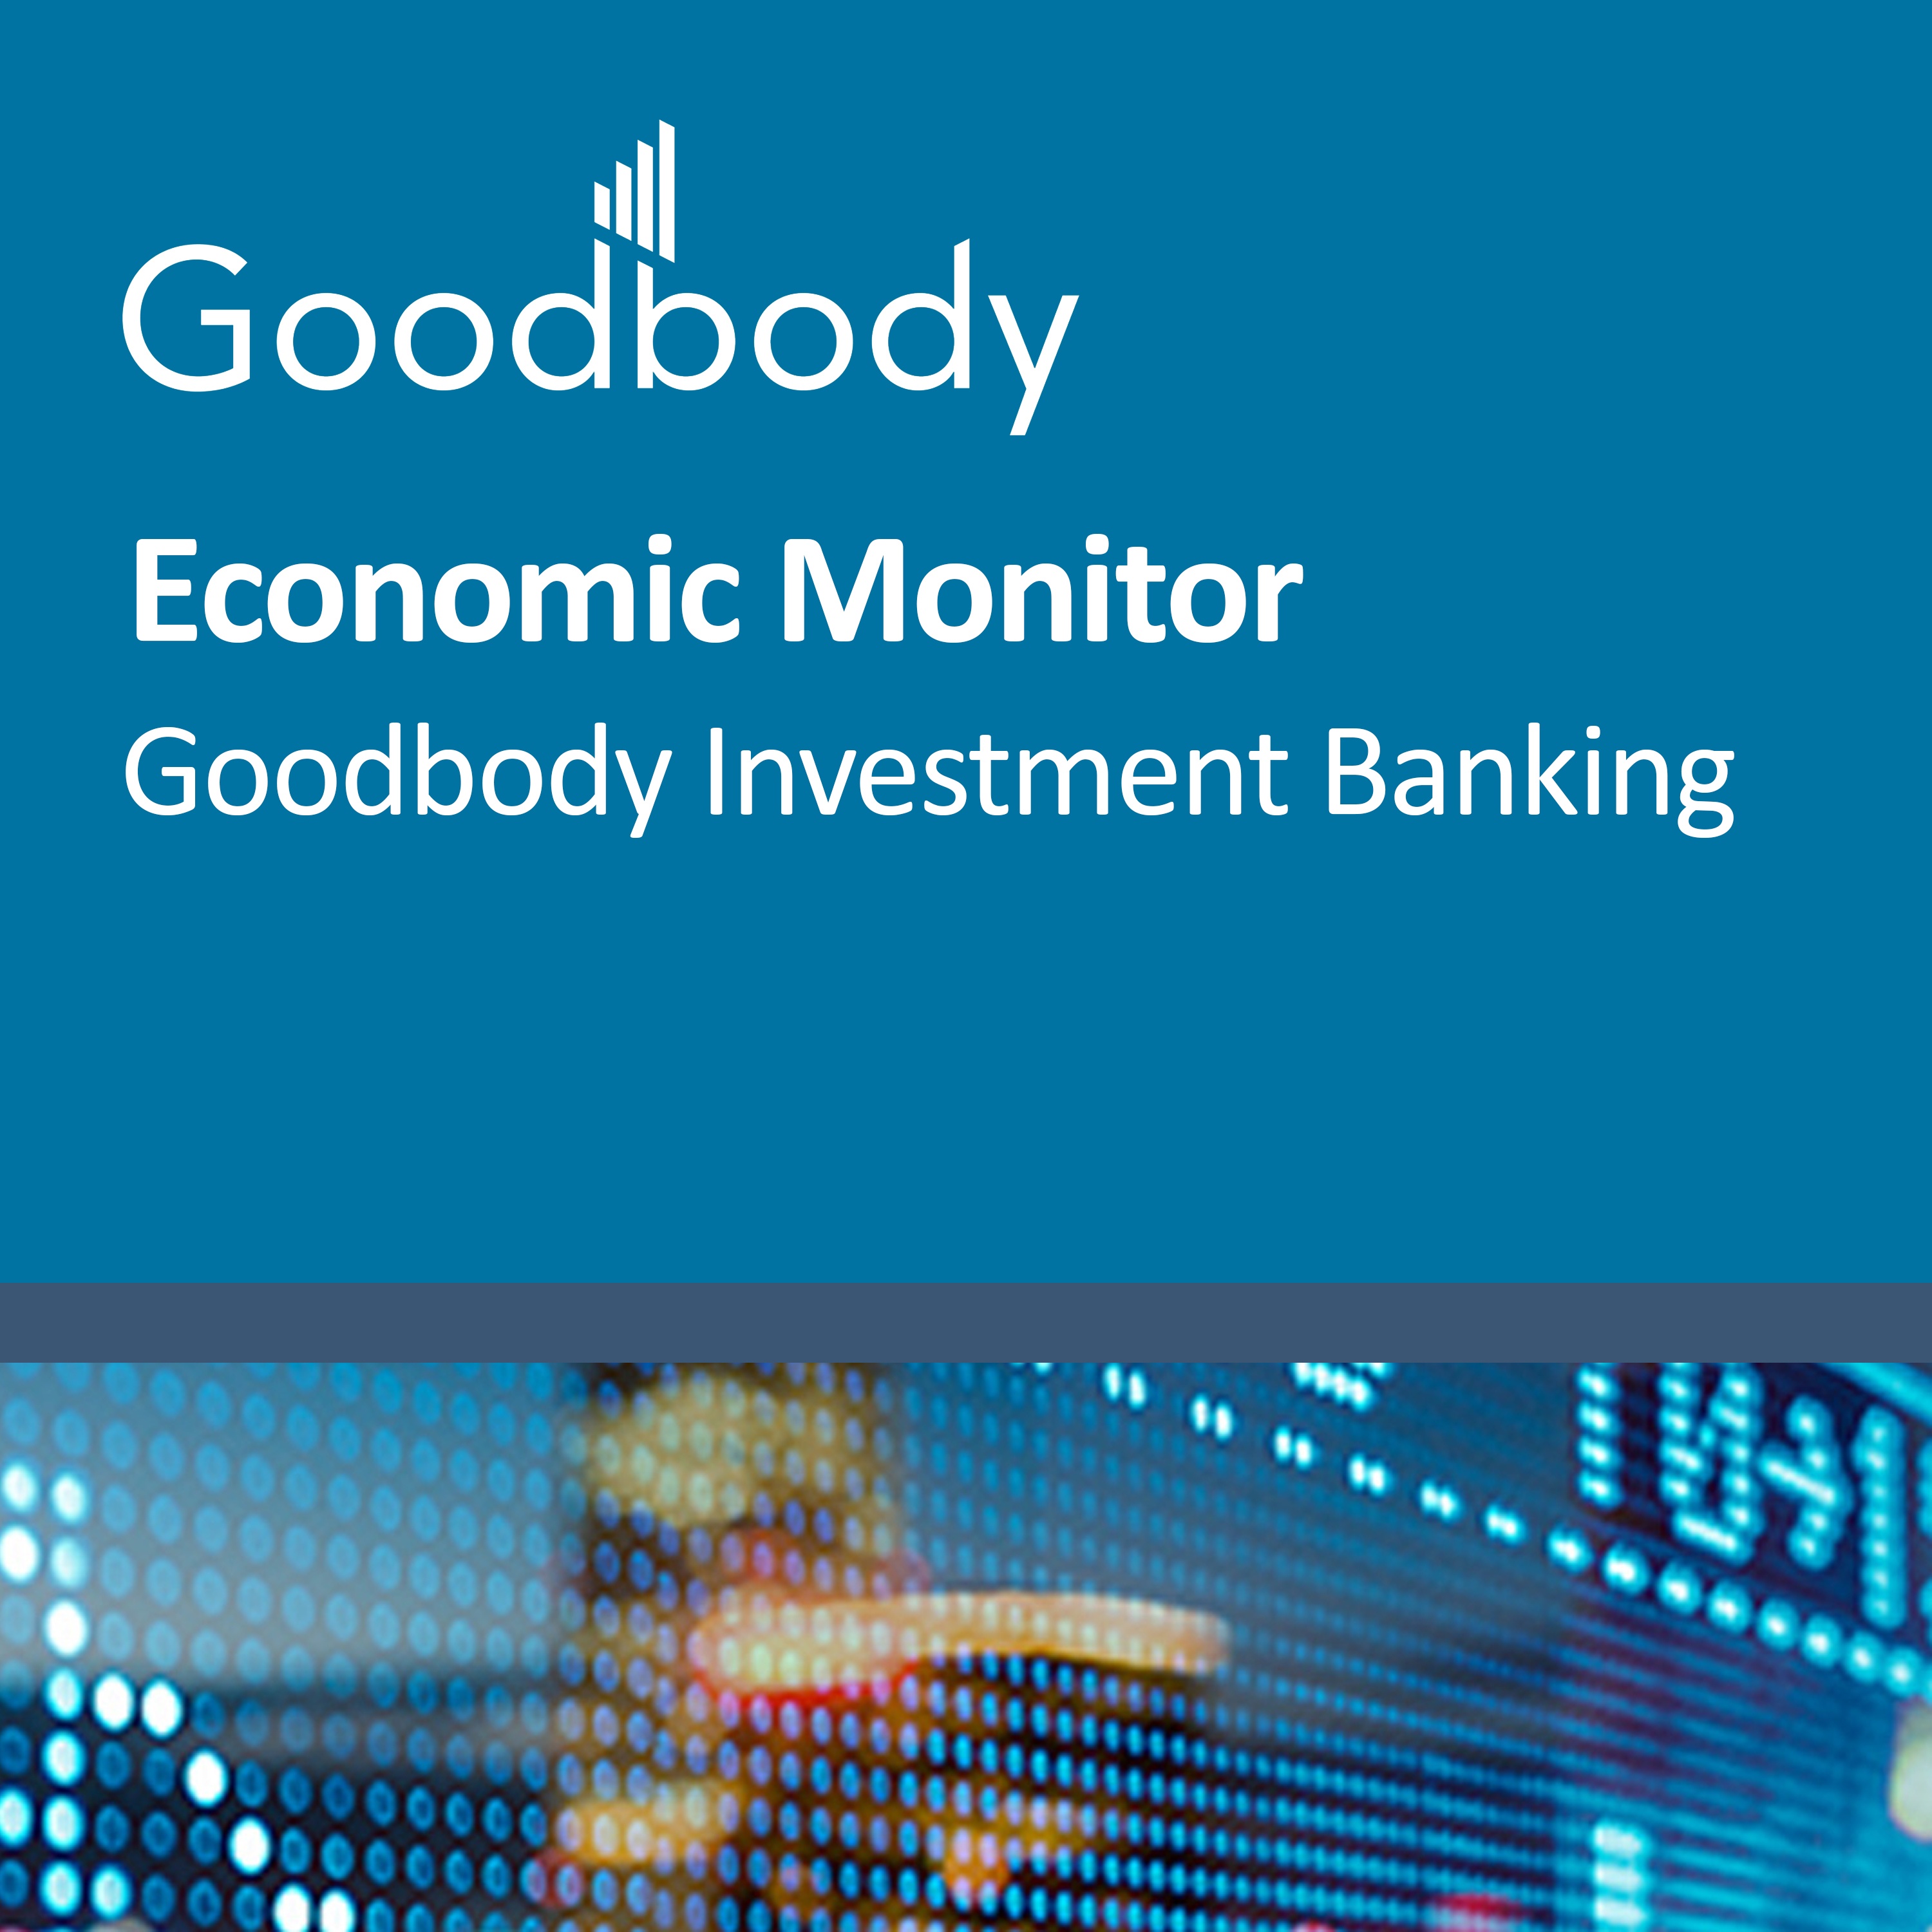 Goodbody Economic Monitor